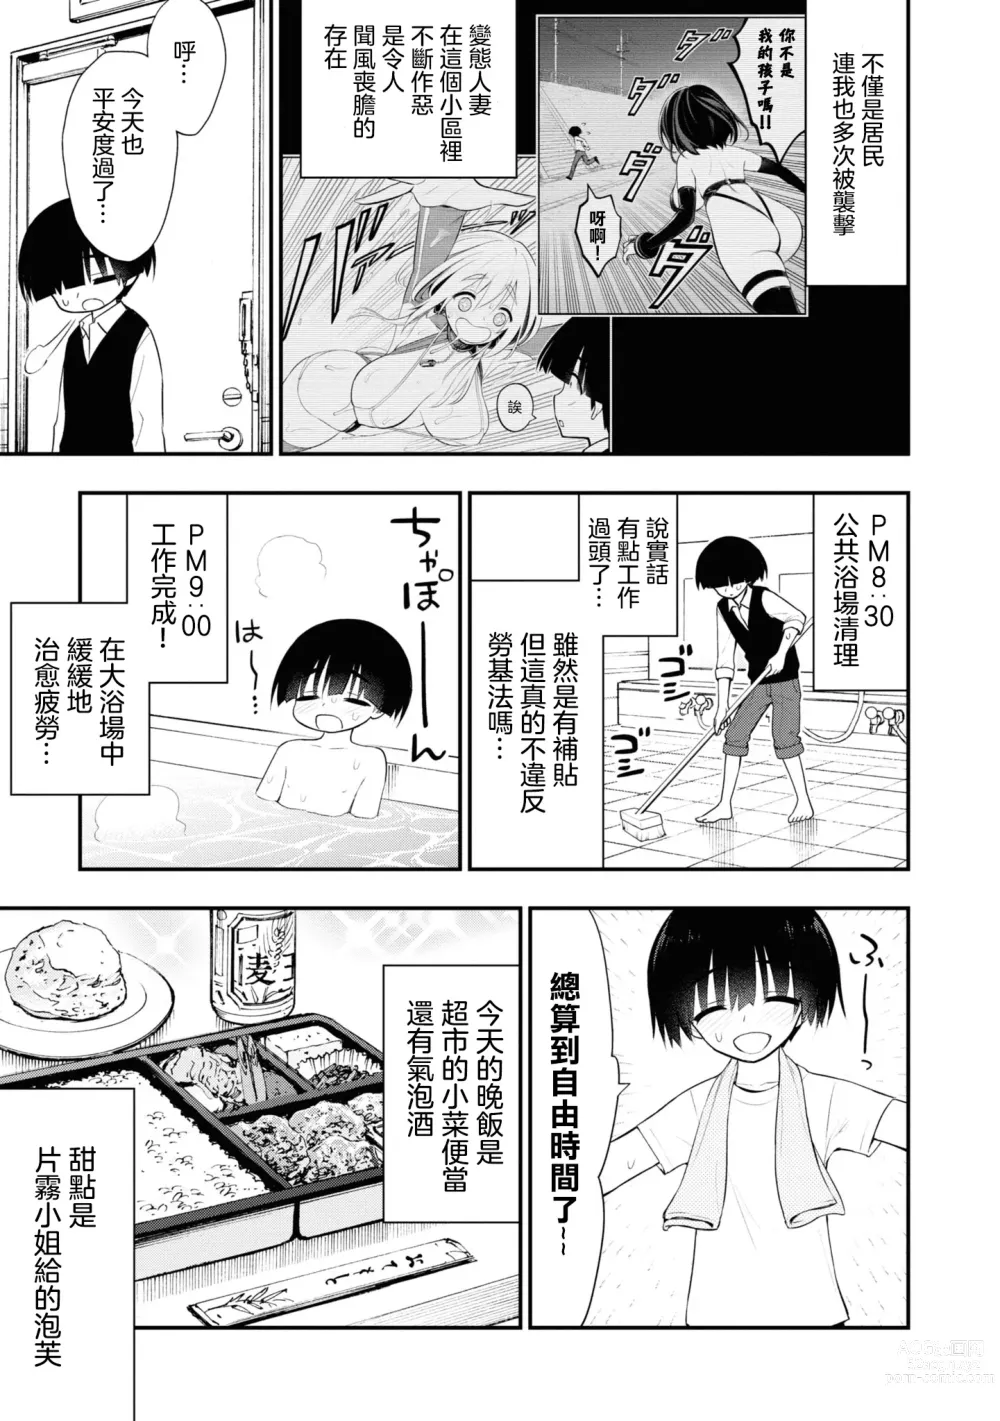 Page 158 of manga 淫獄小區 VOL.2